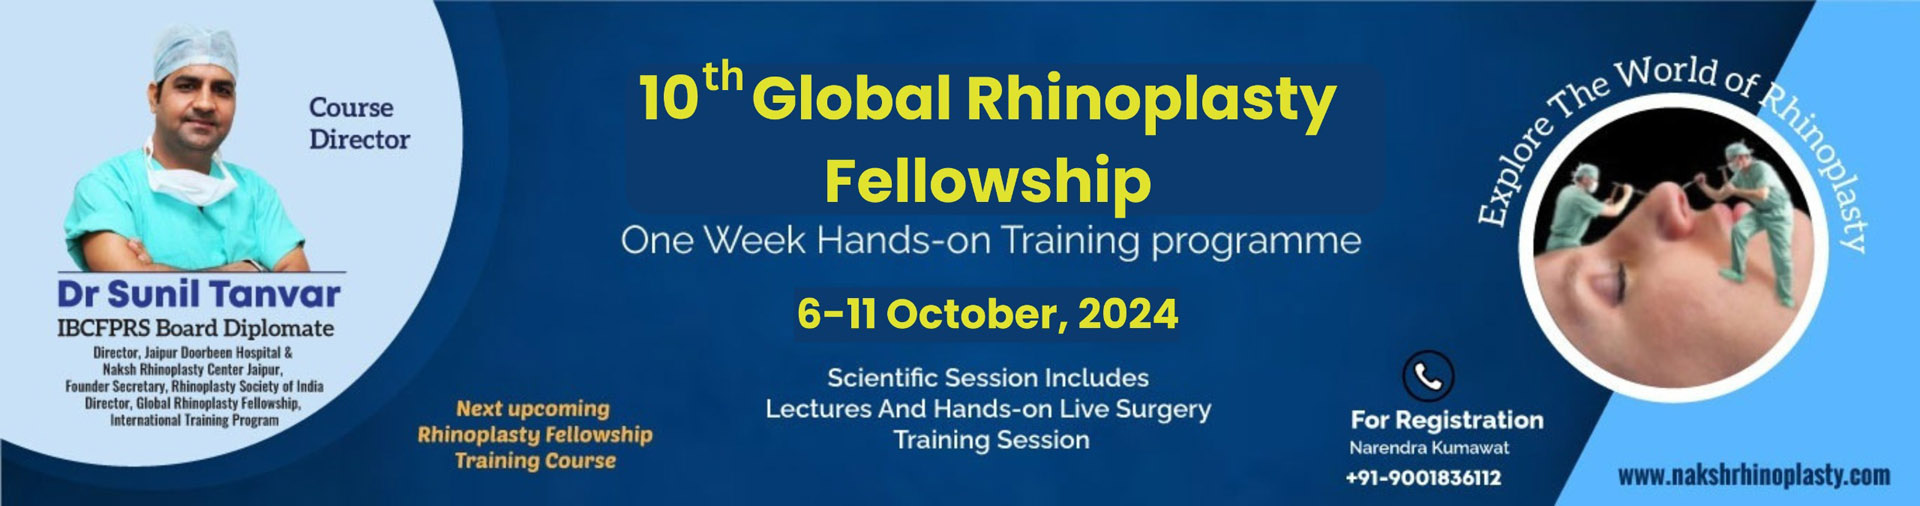 10th global rhinoplasty fellowship